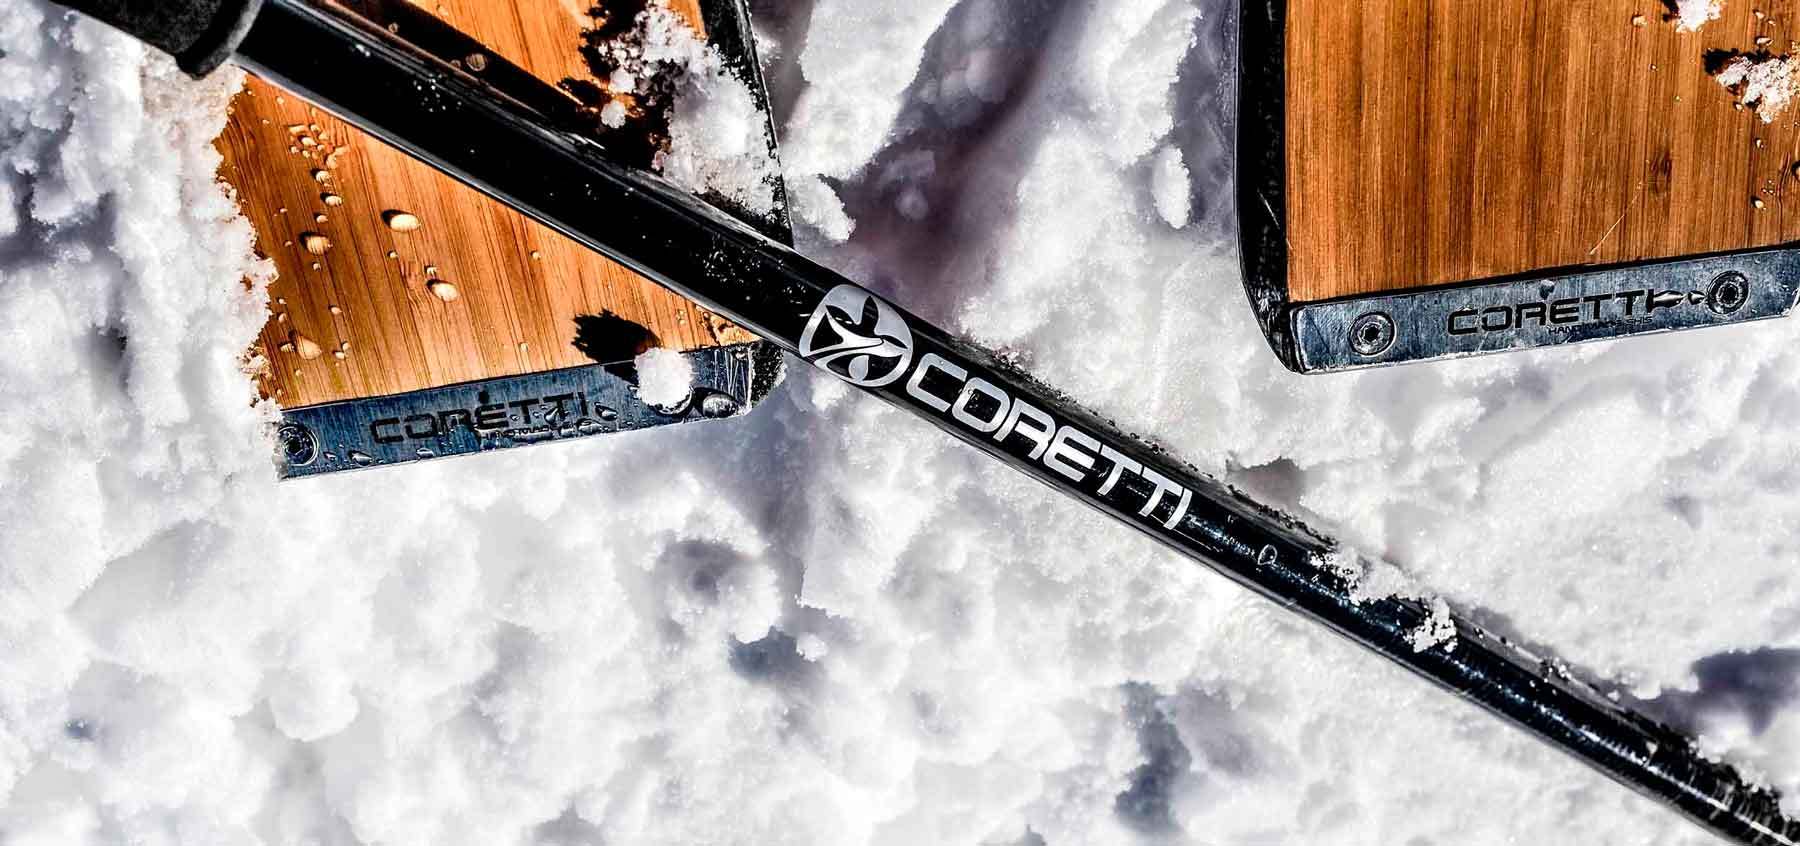 Colección Coretti Skis 2020/2021